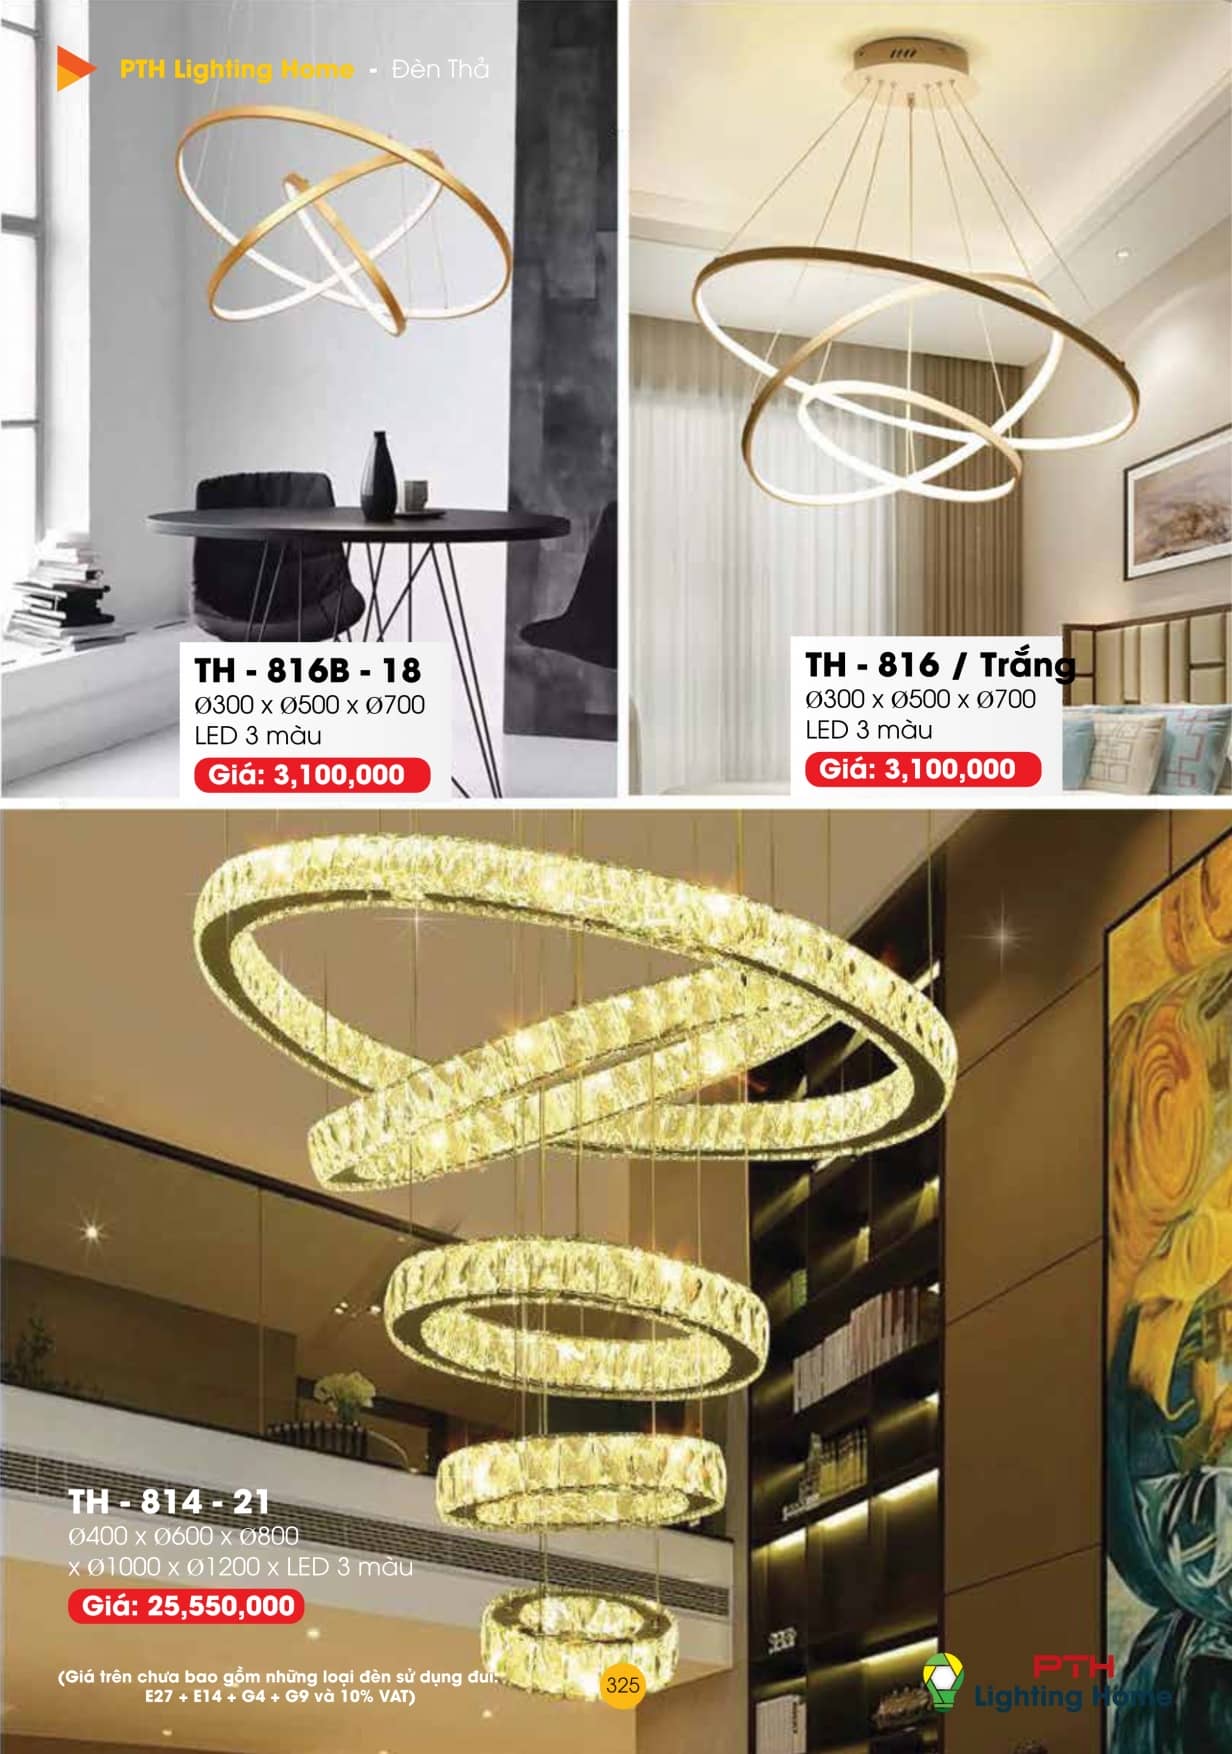 catalogue-bang-gia-den-led-trang-tri-pth-lighting-home-327